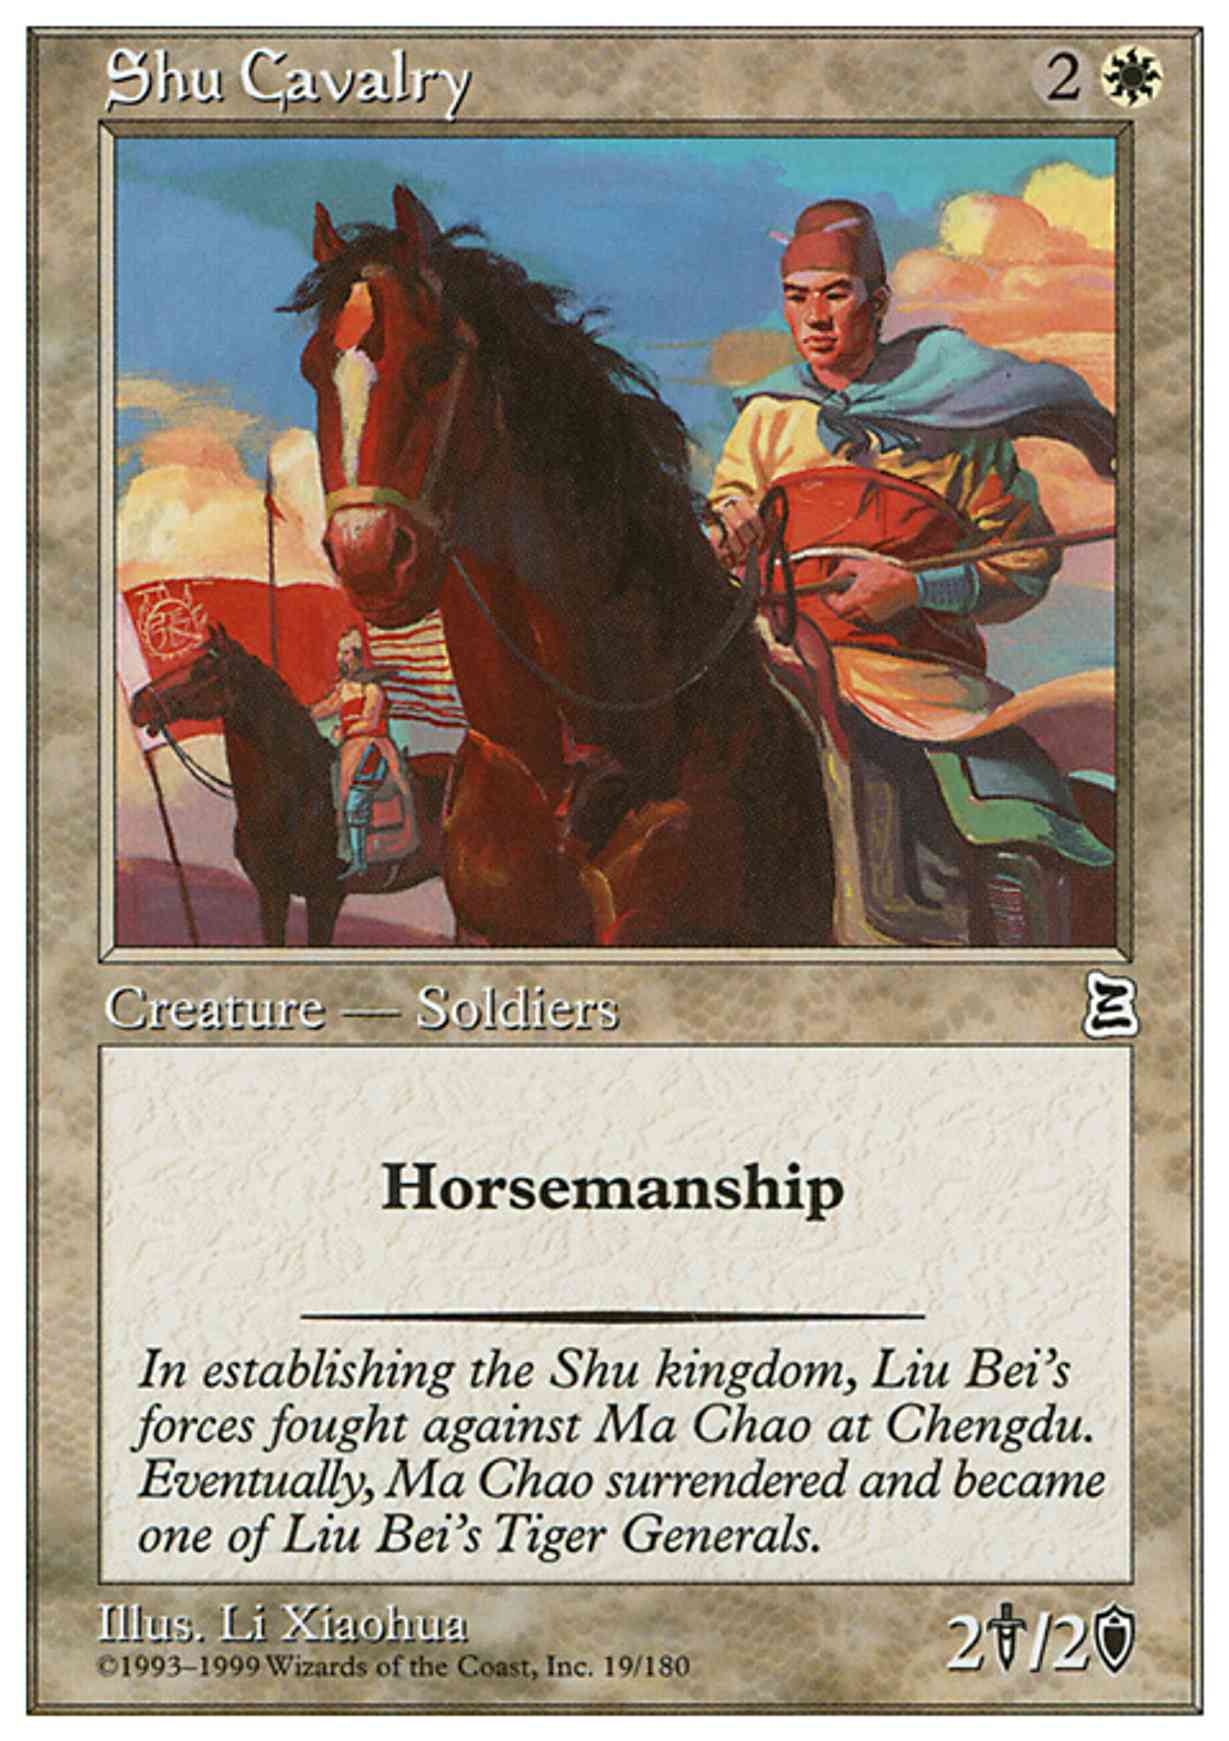 Shu Cavalry magic card front